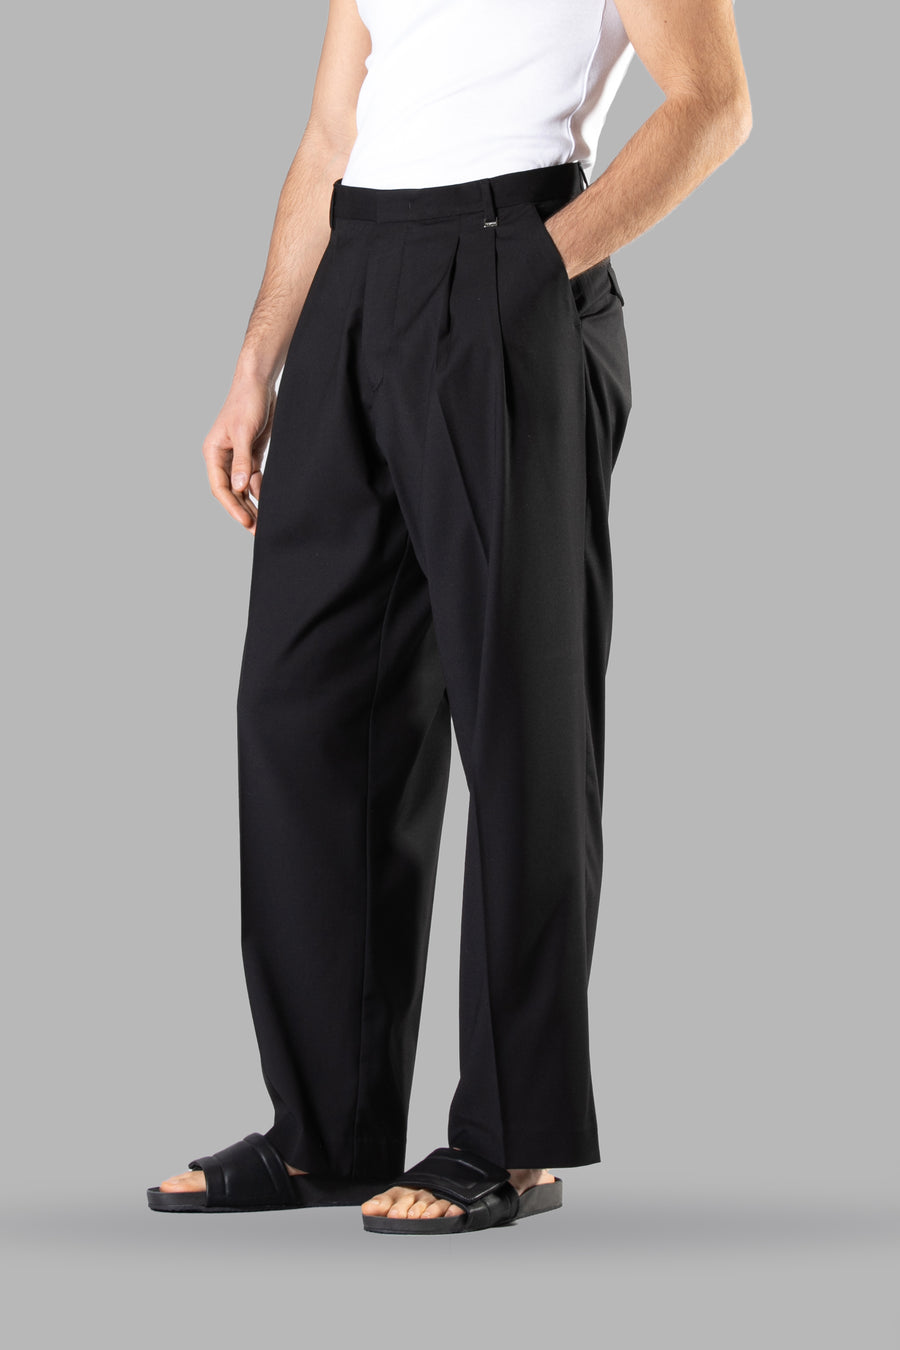 Pantalone fondo ampio doppia pinces - Nero